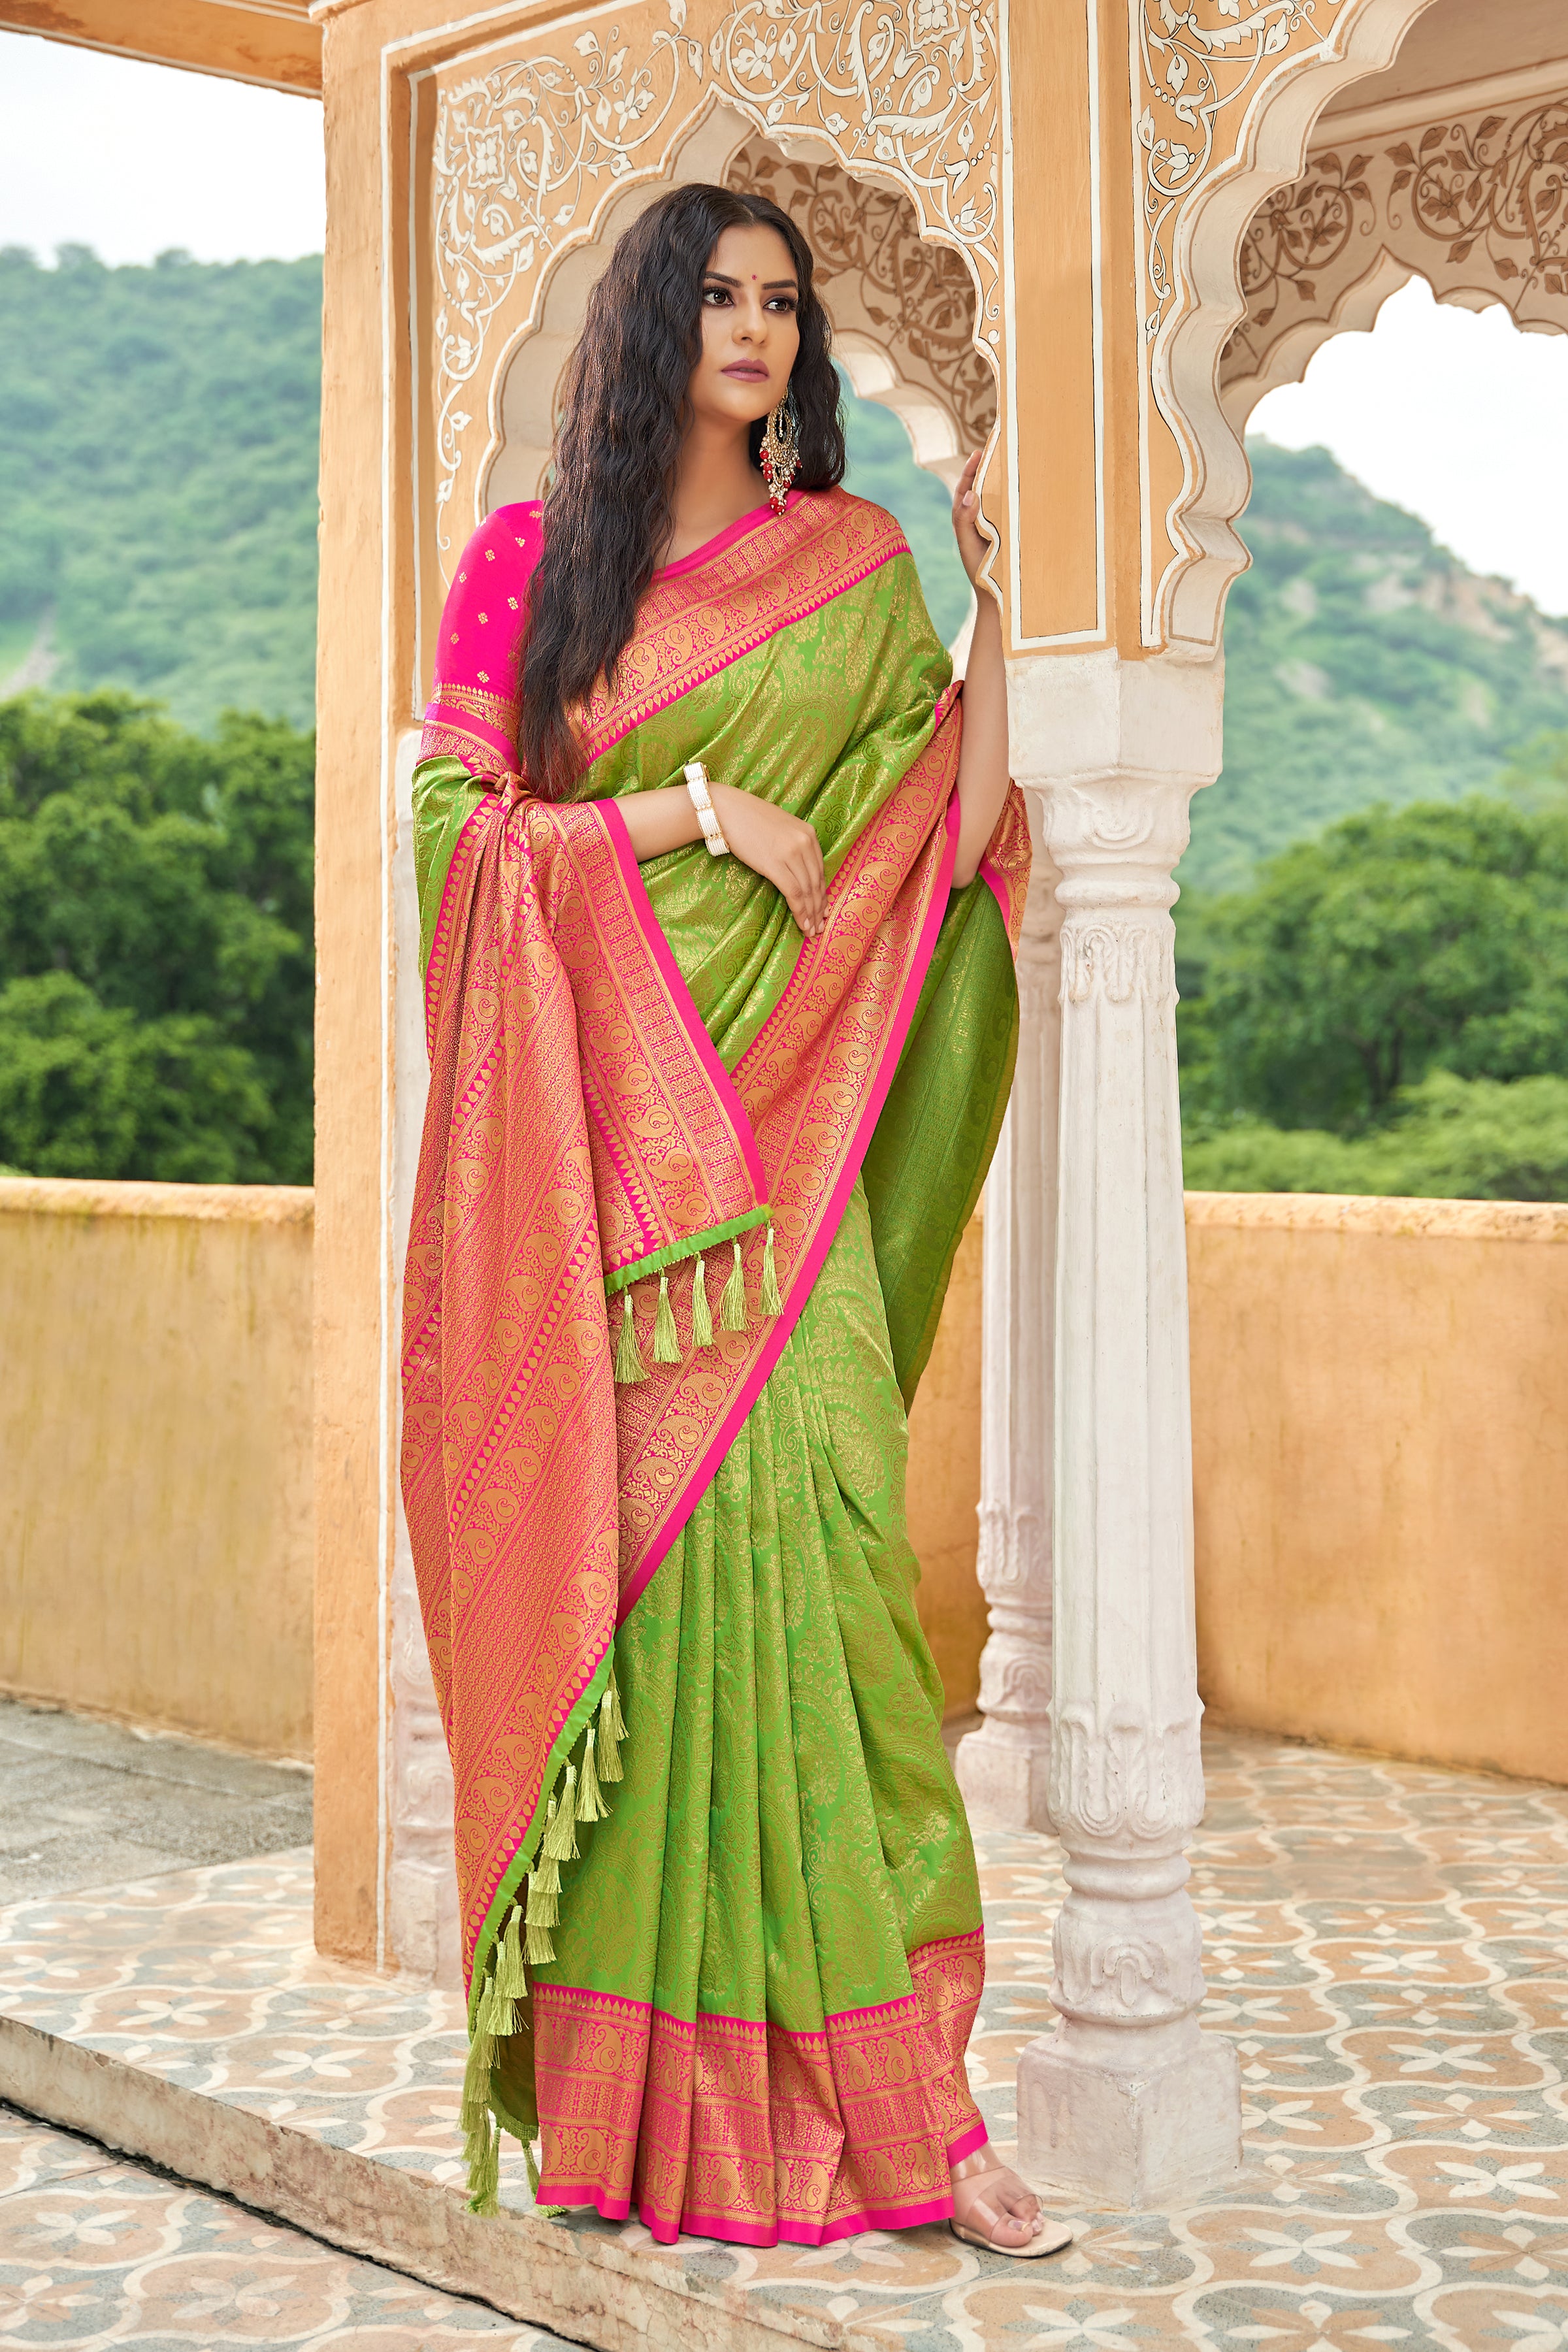 Buy Mahi parrot green bandhej saree at Rs. 1499 online from Fab Funda  banarasi sarees : mai-dd-6